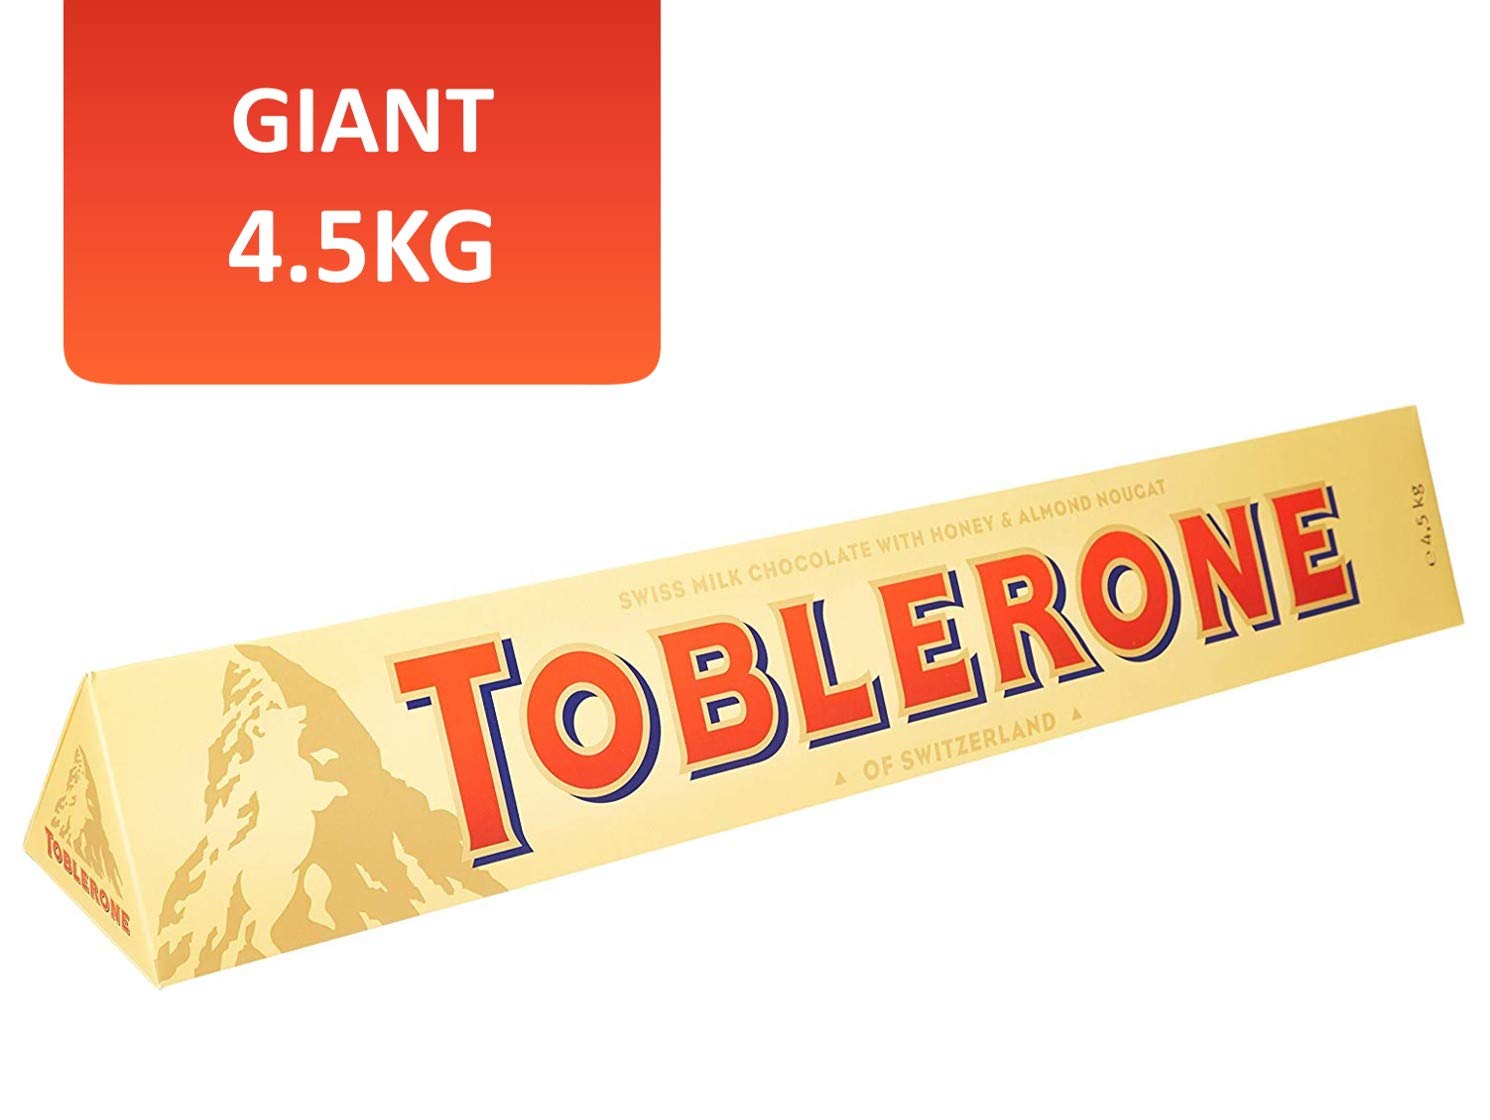 Giant Toblerone Bar